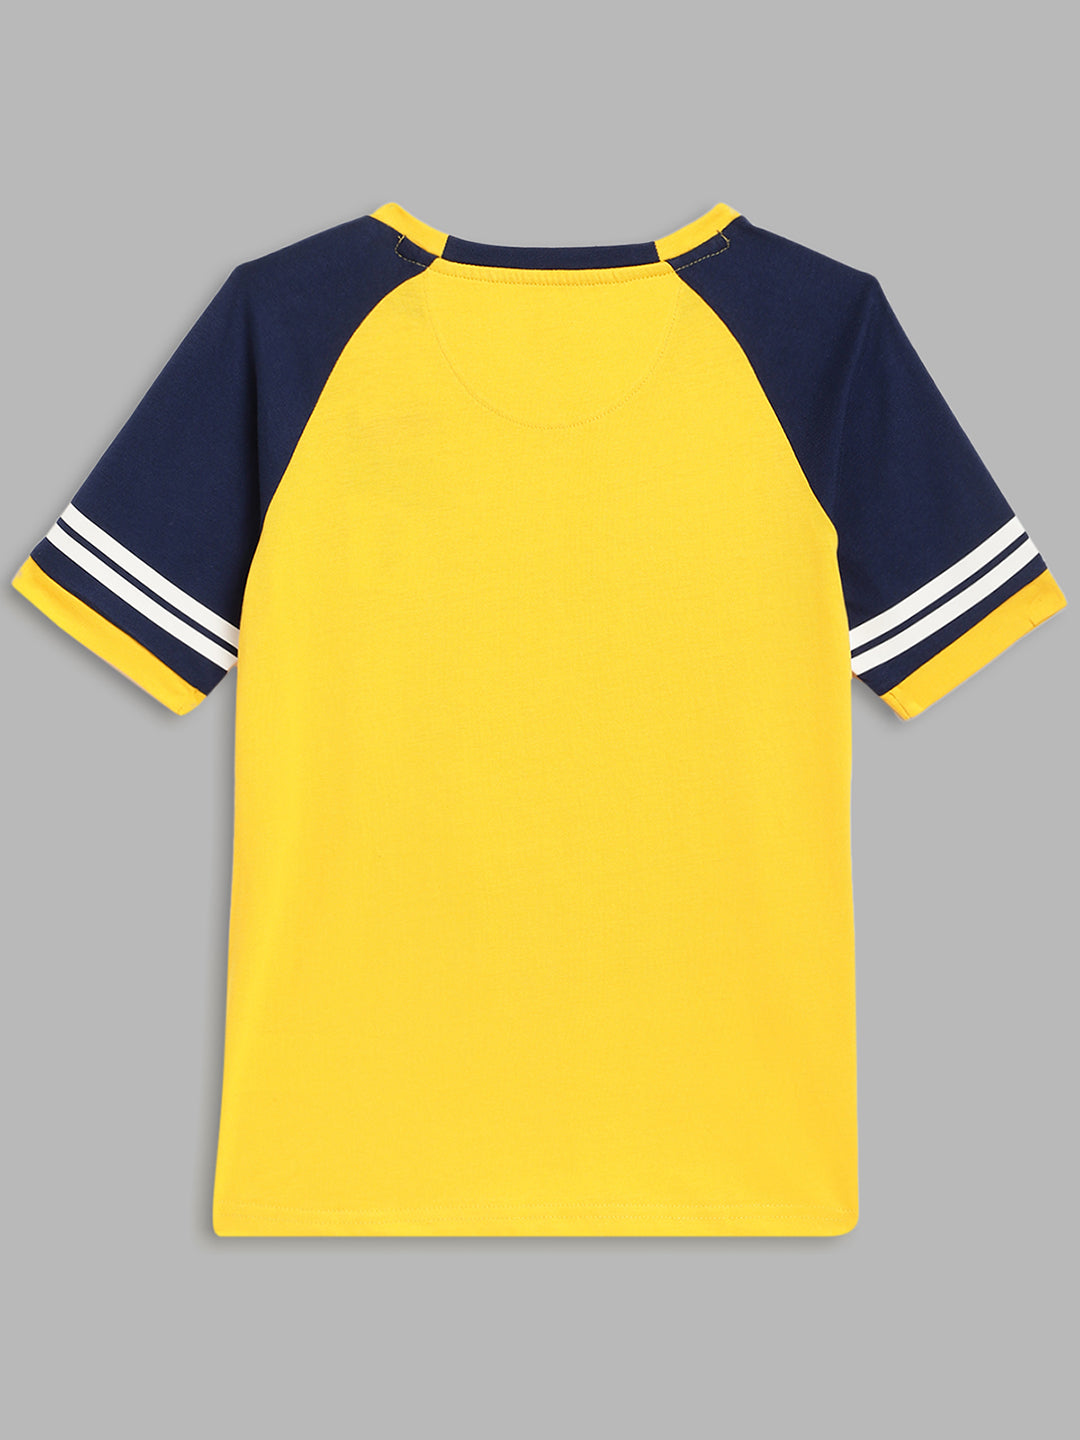 Blue Giraffe Kids Yellow Printed Marvel Avengers Regular Fit T-Shirt